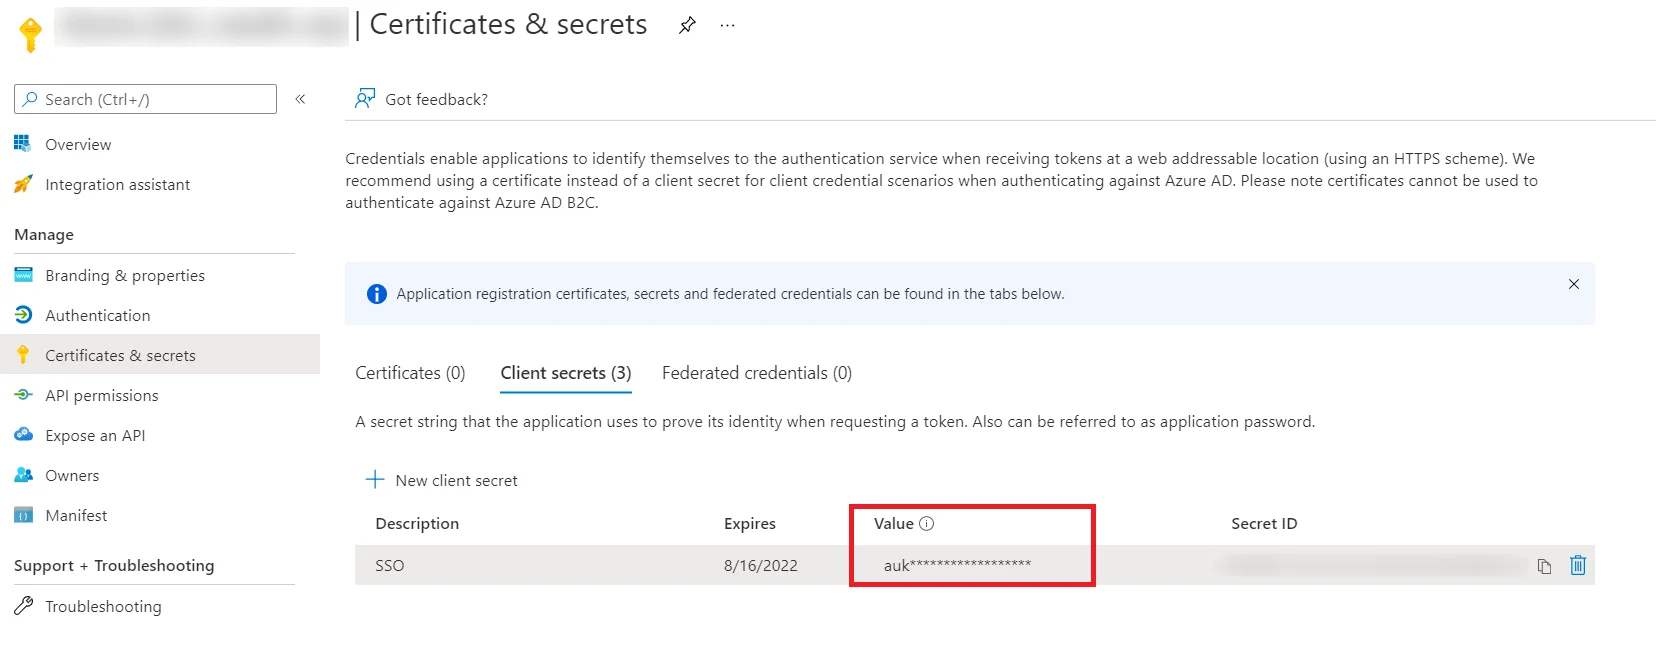 nopCommerce OAuth Single Sign-On (SSO) using Azure AD as IDP - Secret-Key-2